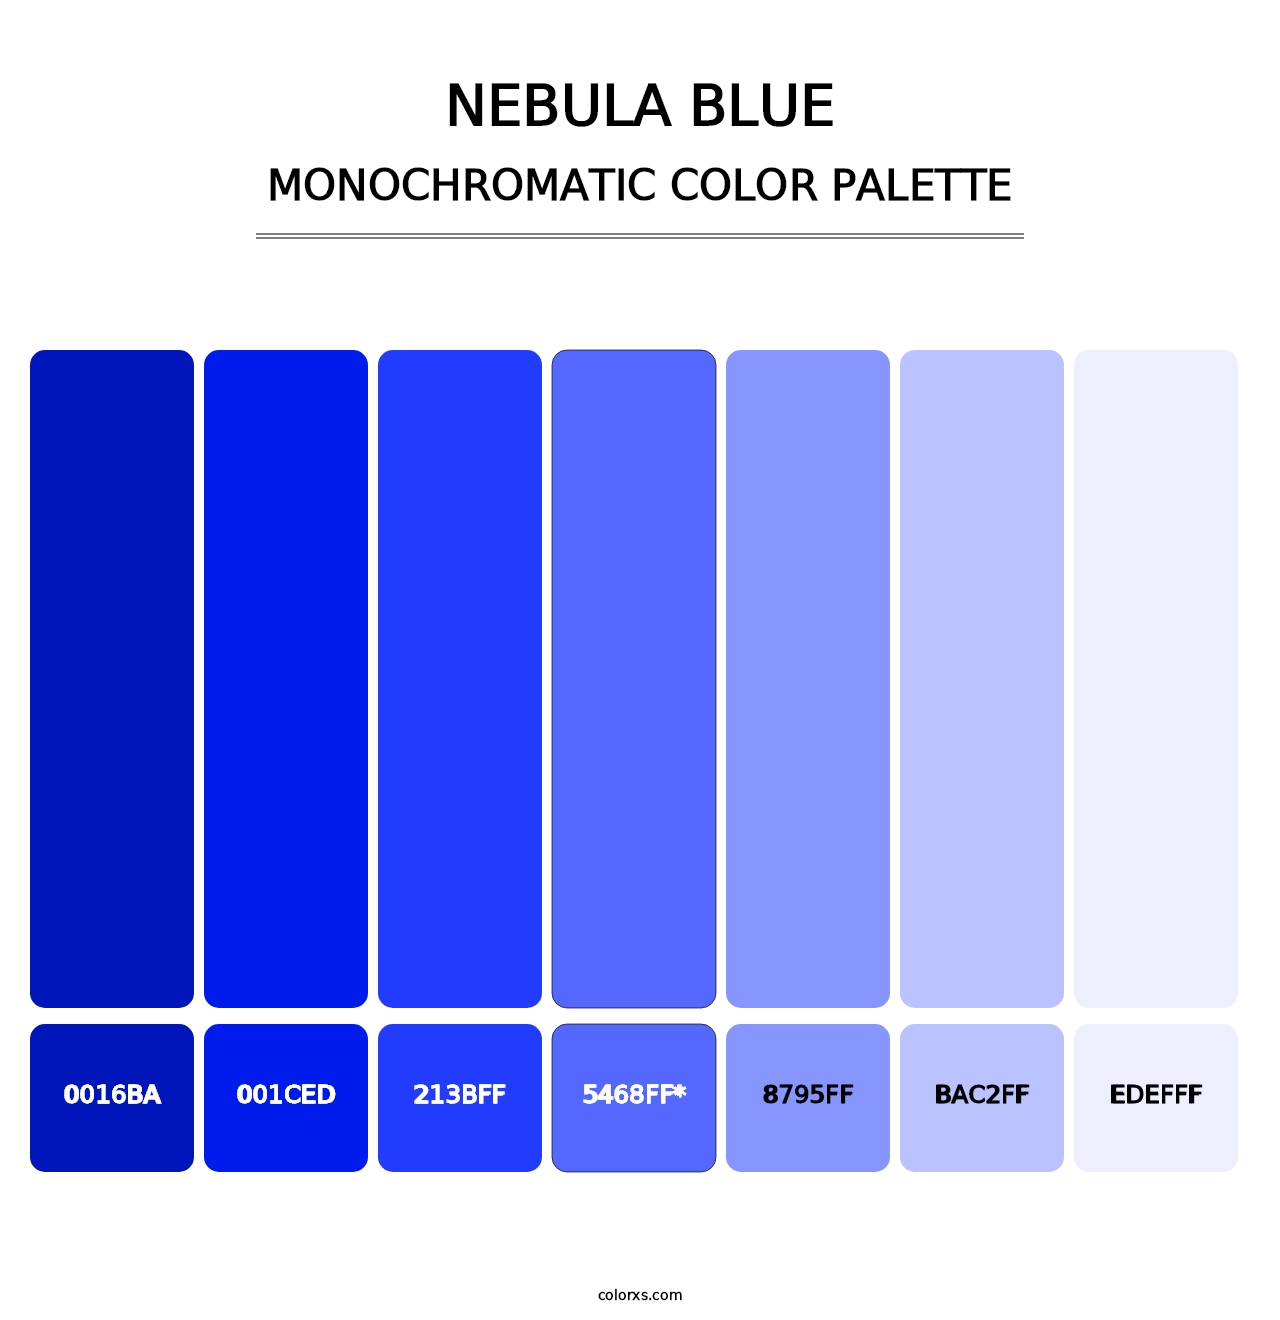 Nebula Blue - Monochromatic Color Palette